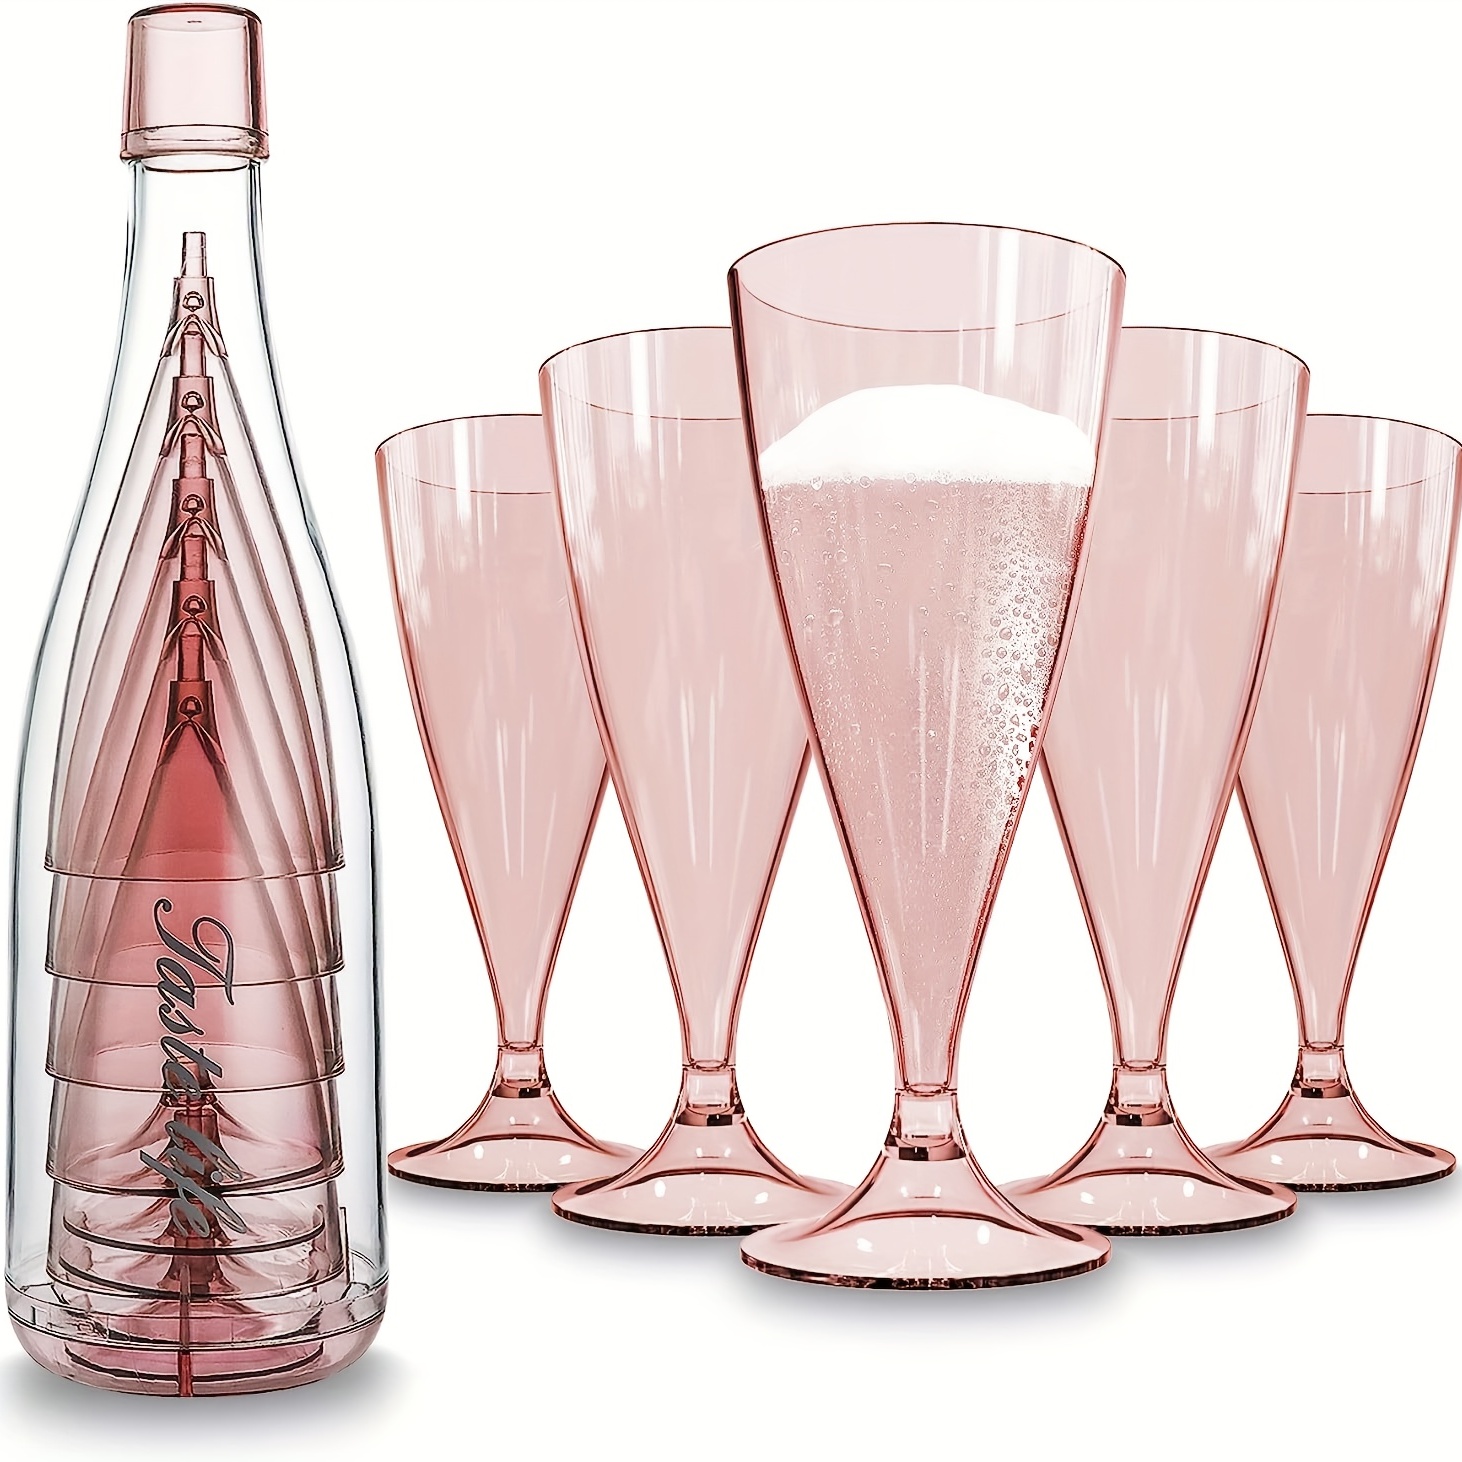 

5pcs, Pink Plastic Champagne Flutes, 6oz Plastic Champagne Glasses With Storage Bottle, Reusable & Bpa Free Stemless Champagne Flutes Plastic, Ideal For Parties, Weddings, Birthdays